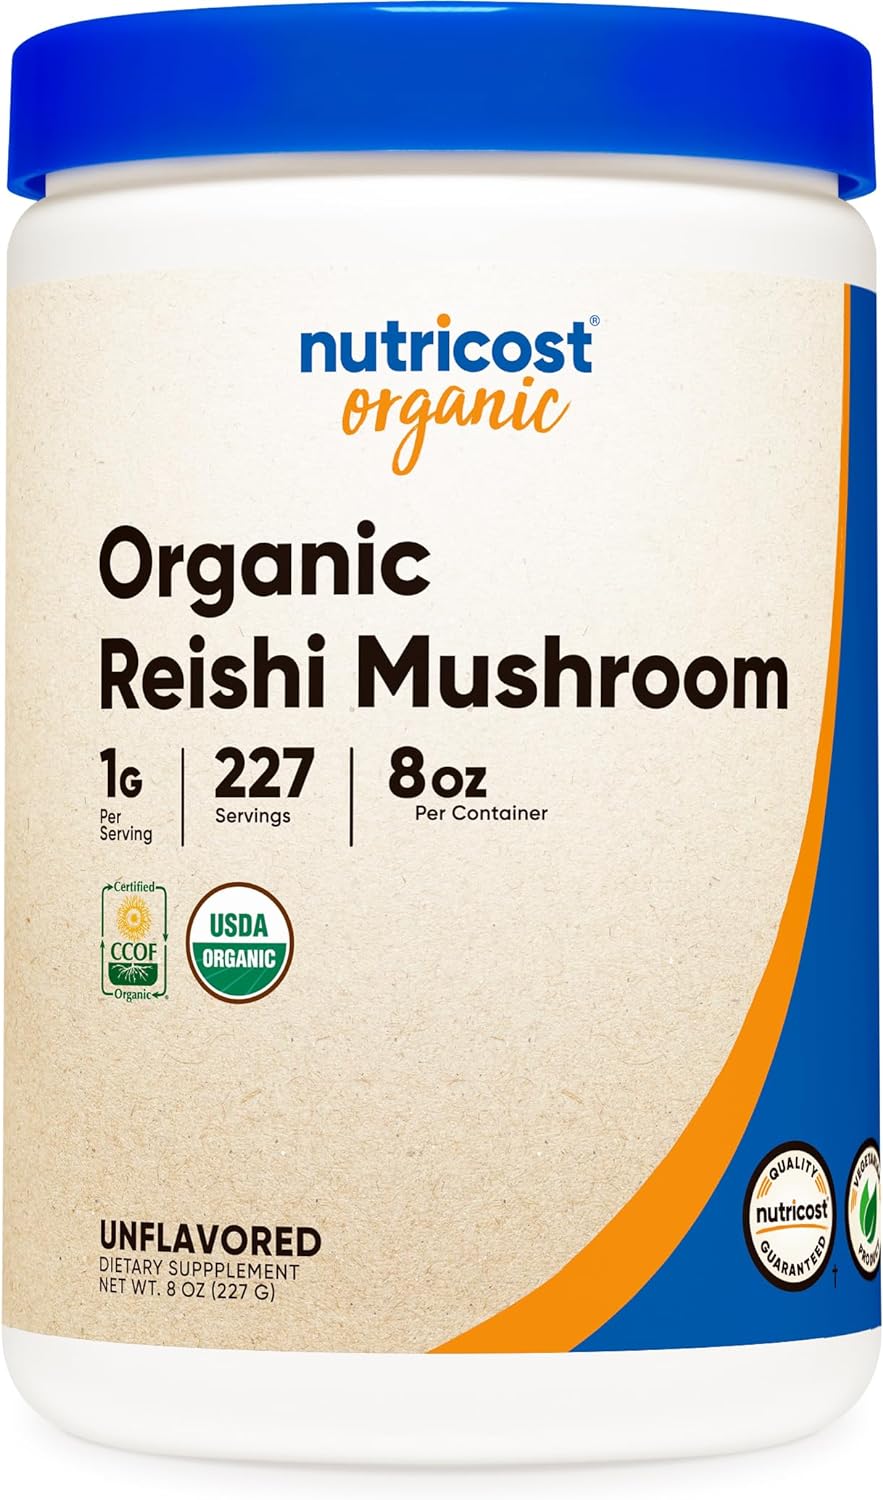 Nutricost Organic Reishi Mushroom Powder 0.5LB (8oz) - USDA Certified